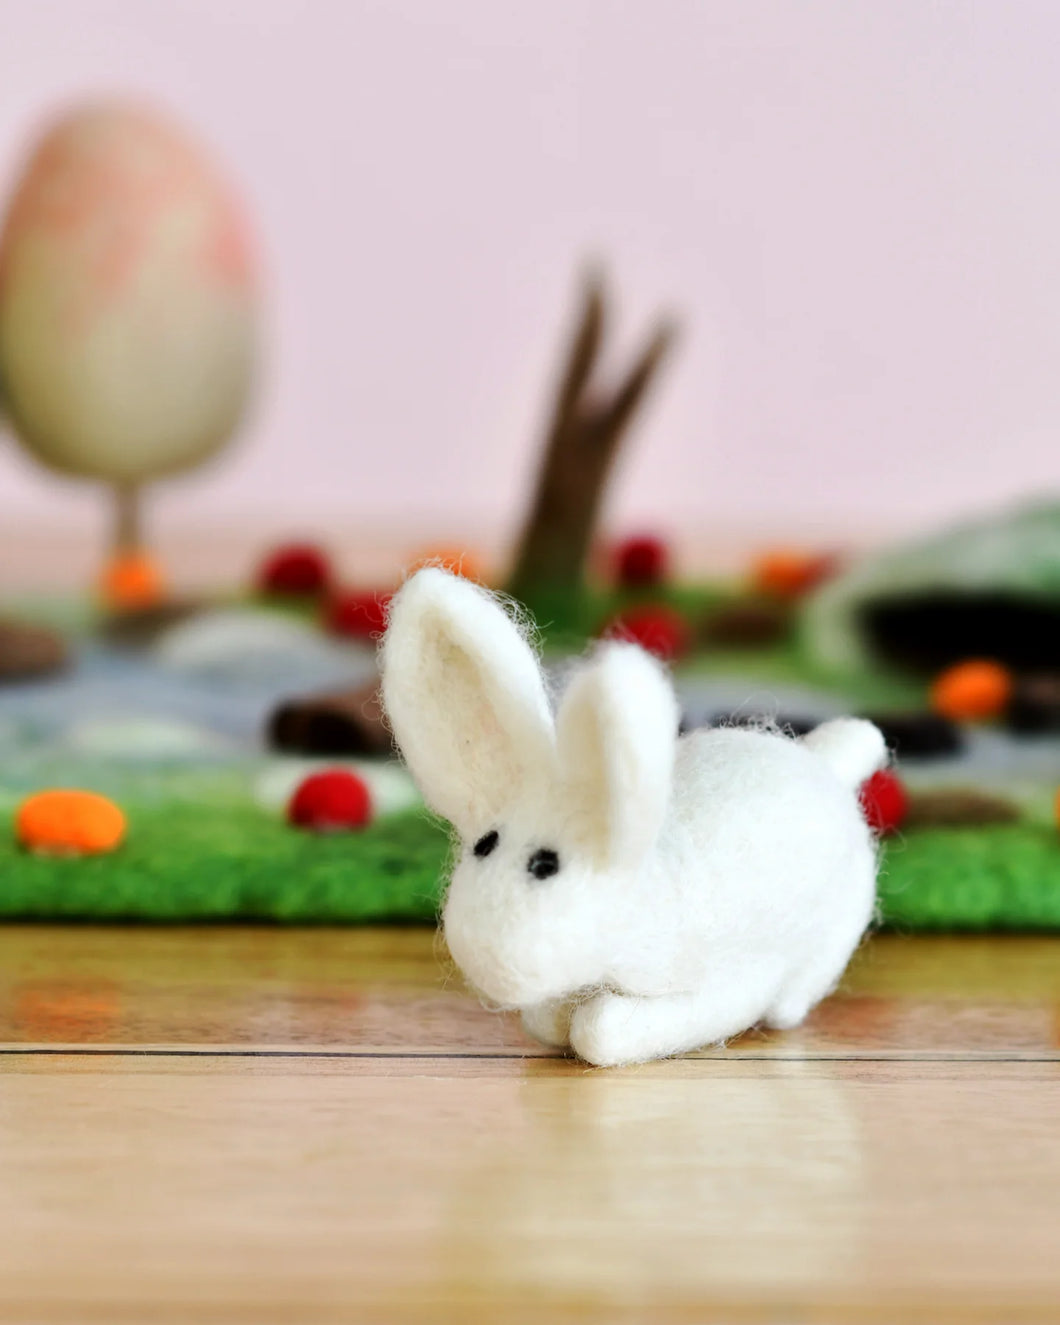 Tara Treasures - Felt White Rabbit Toy